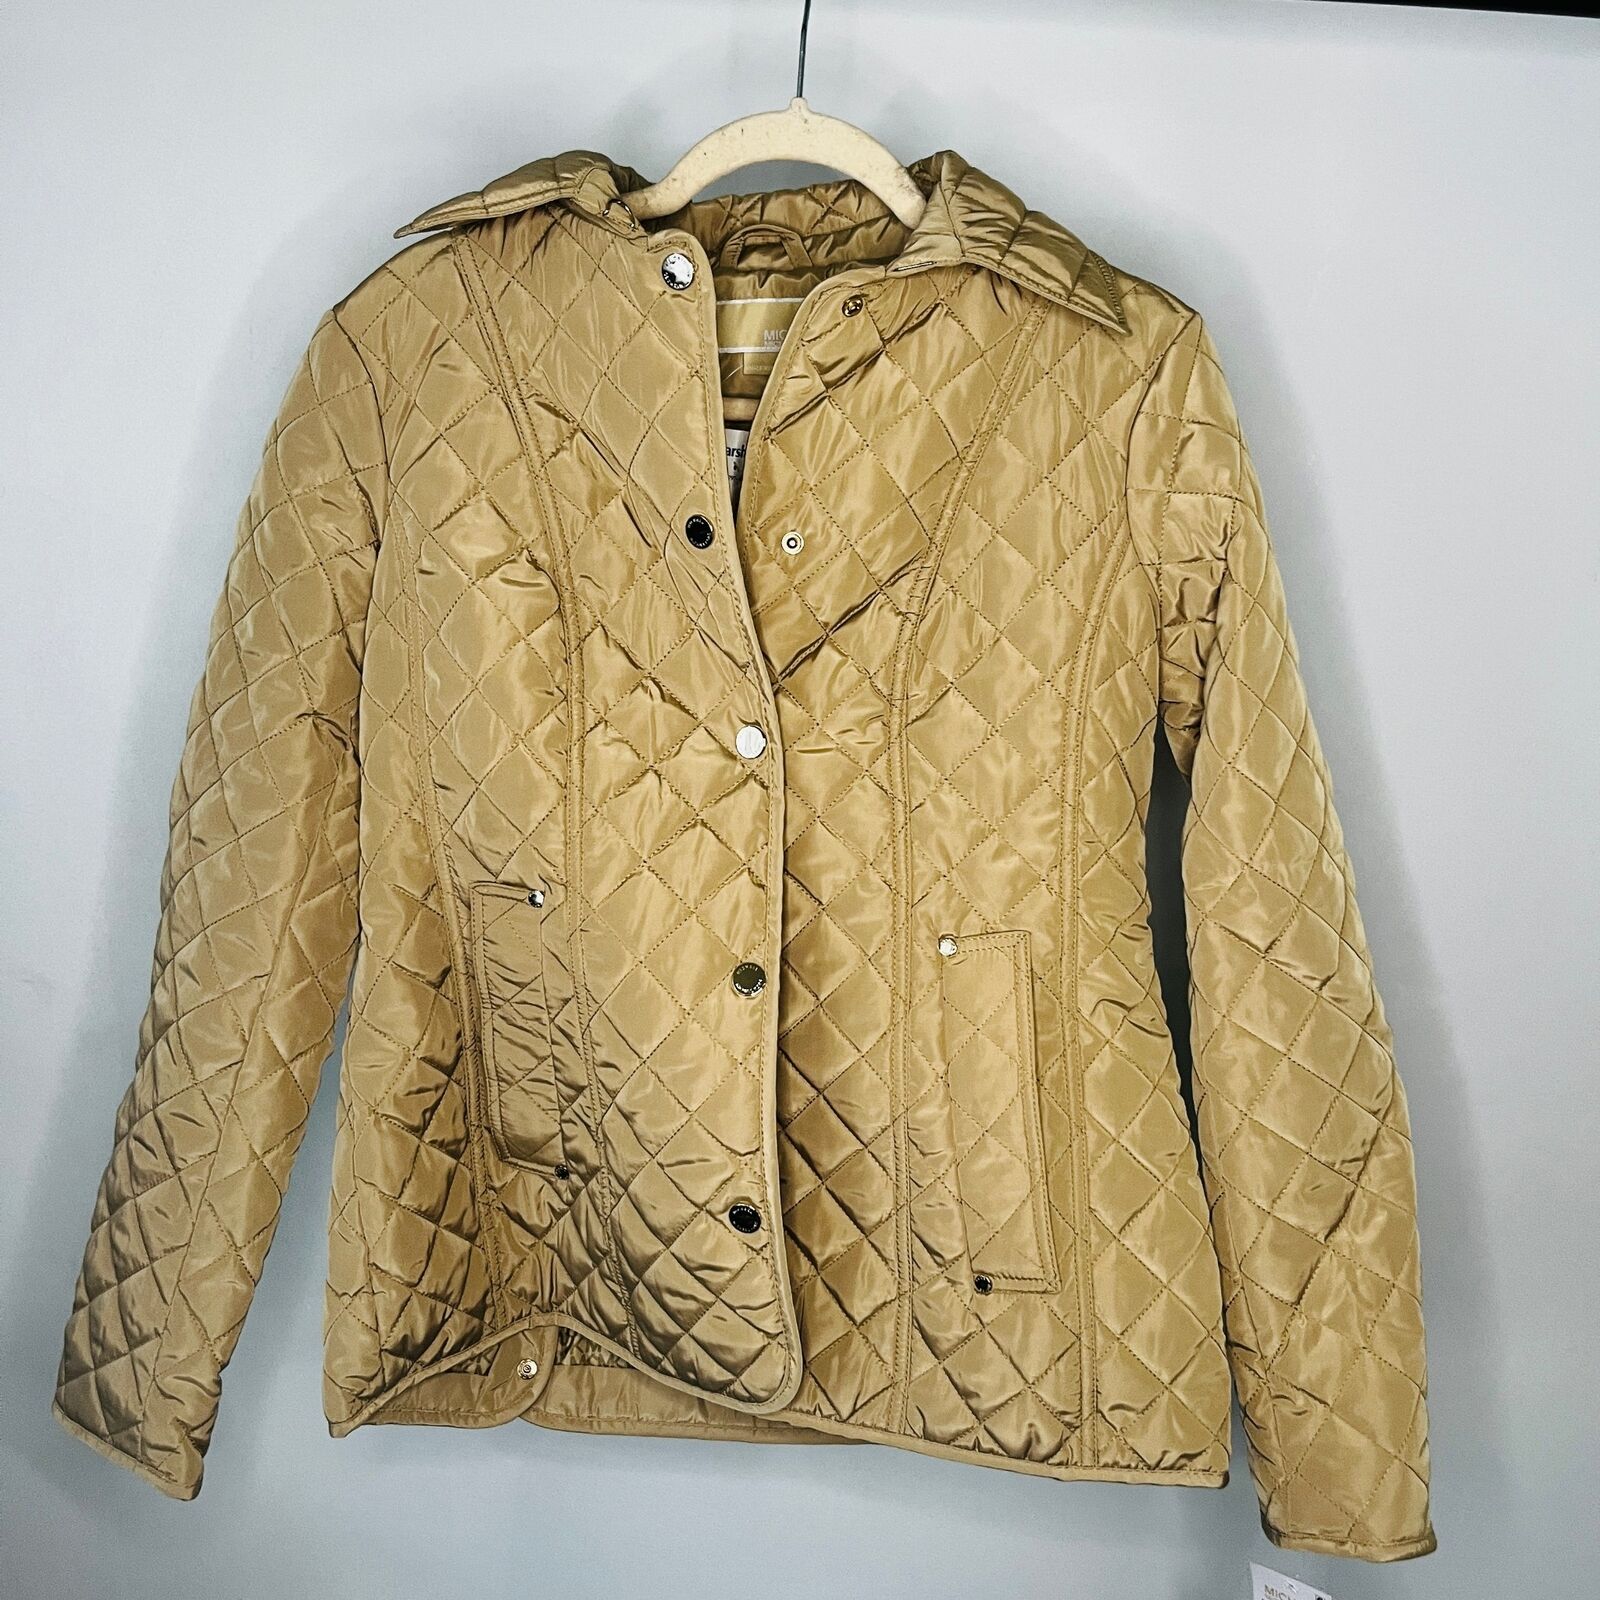 Michael Kors Women's Quilted Coat Beige/Khaki Size M | eBay